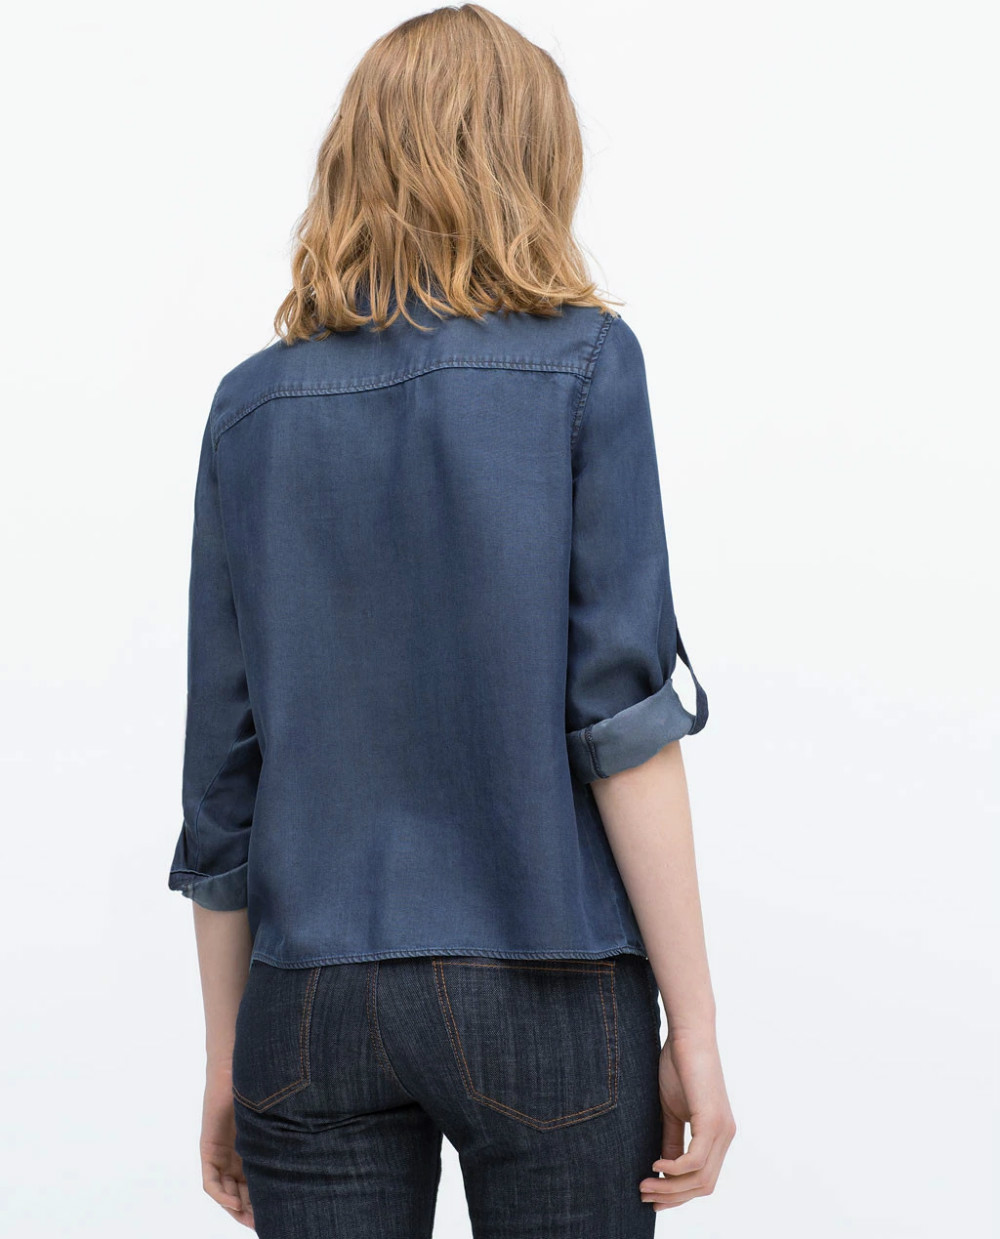 Fashion Female elegant blue Denim shirts blouses For Women Pocket button turn-down collar long sleeve casual tops